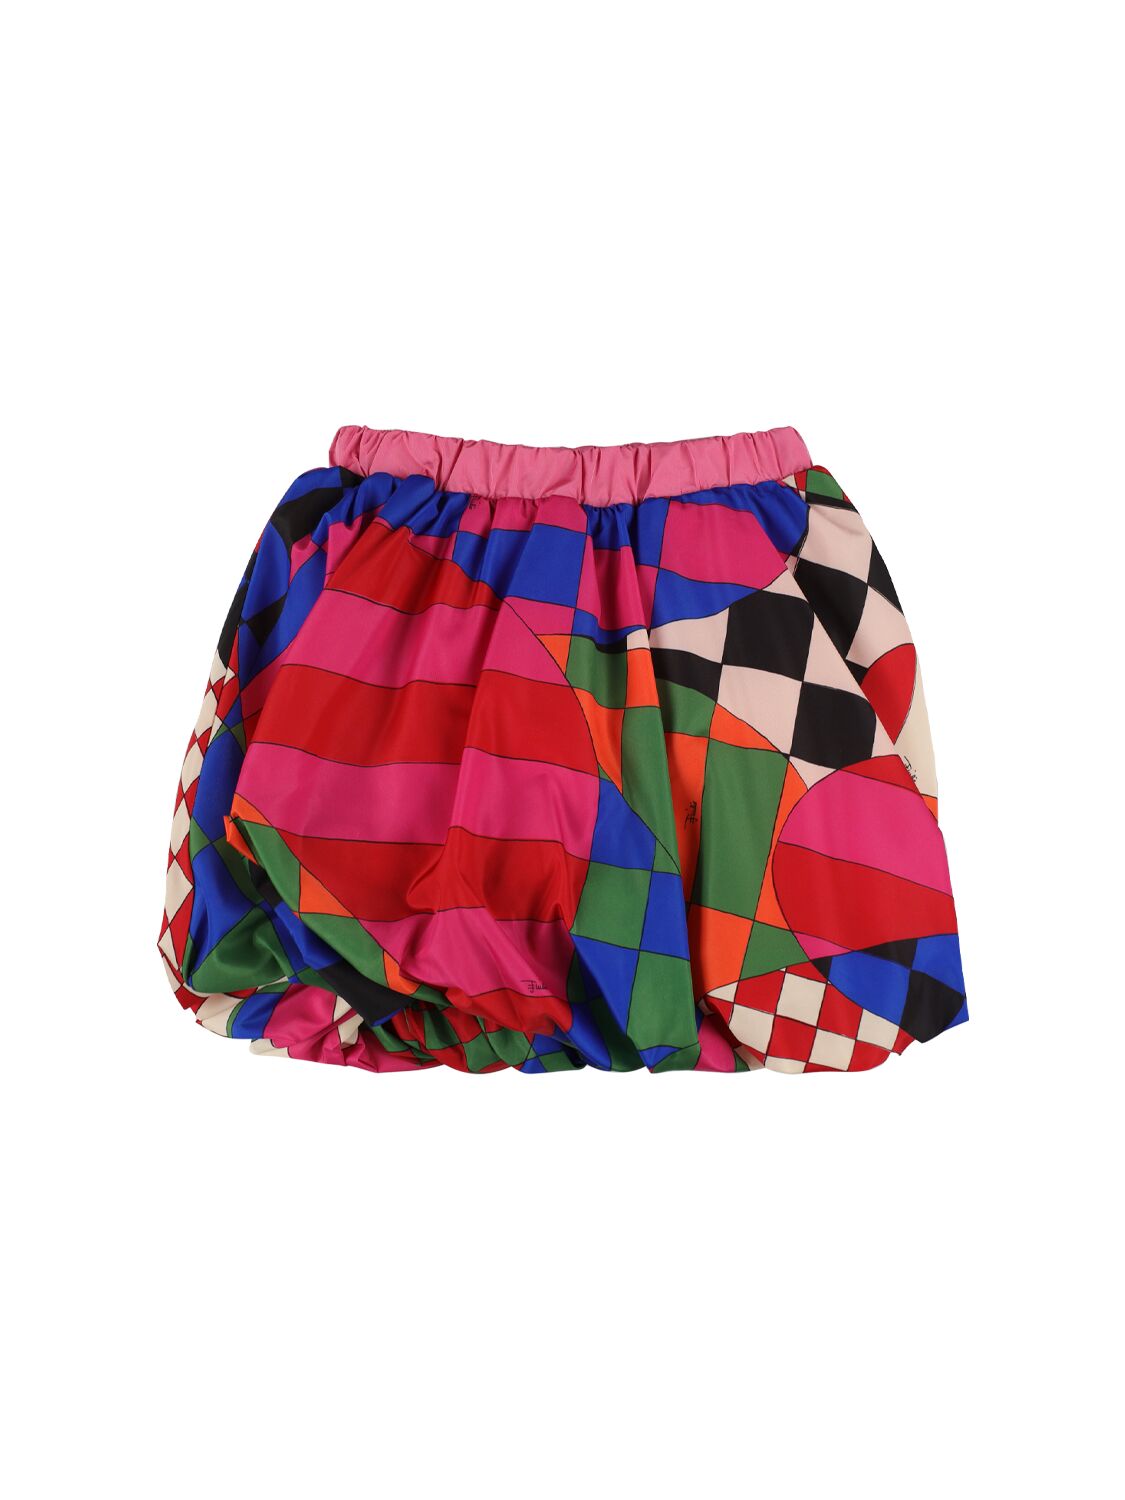 Pucci Kids' Printed Taffeta Skirt In Multi,fuchsia